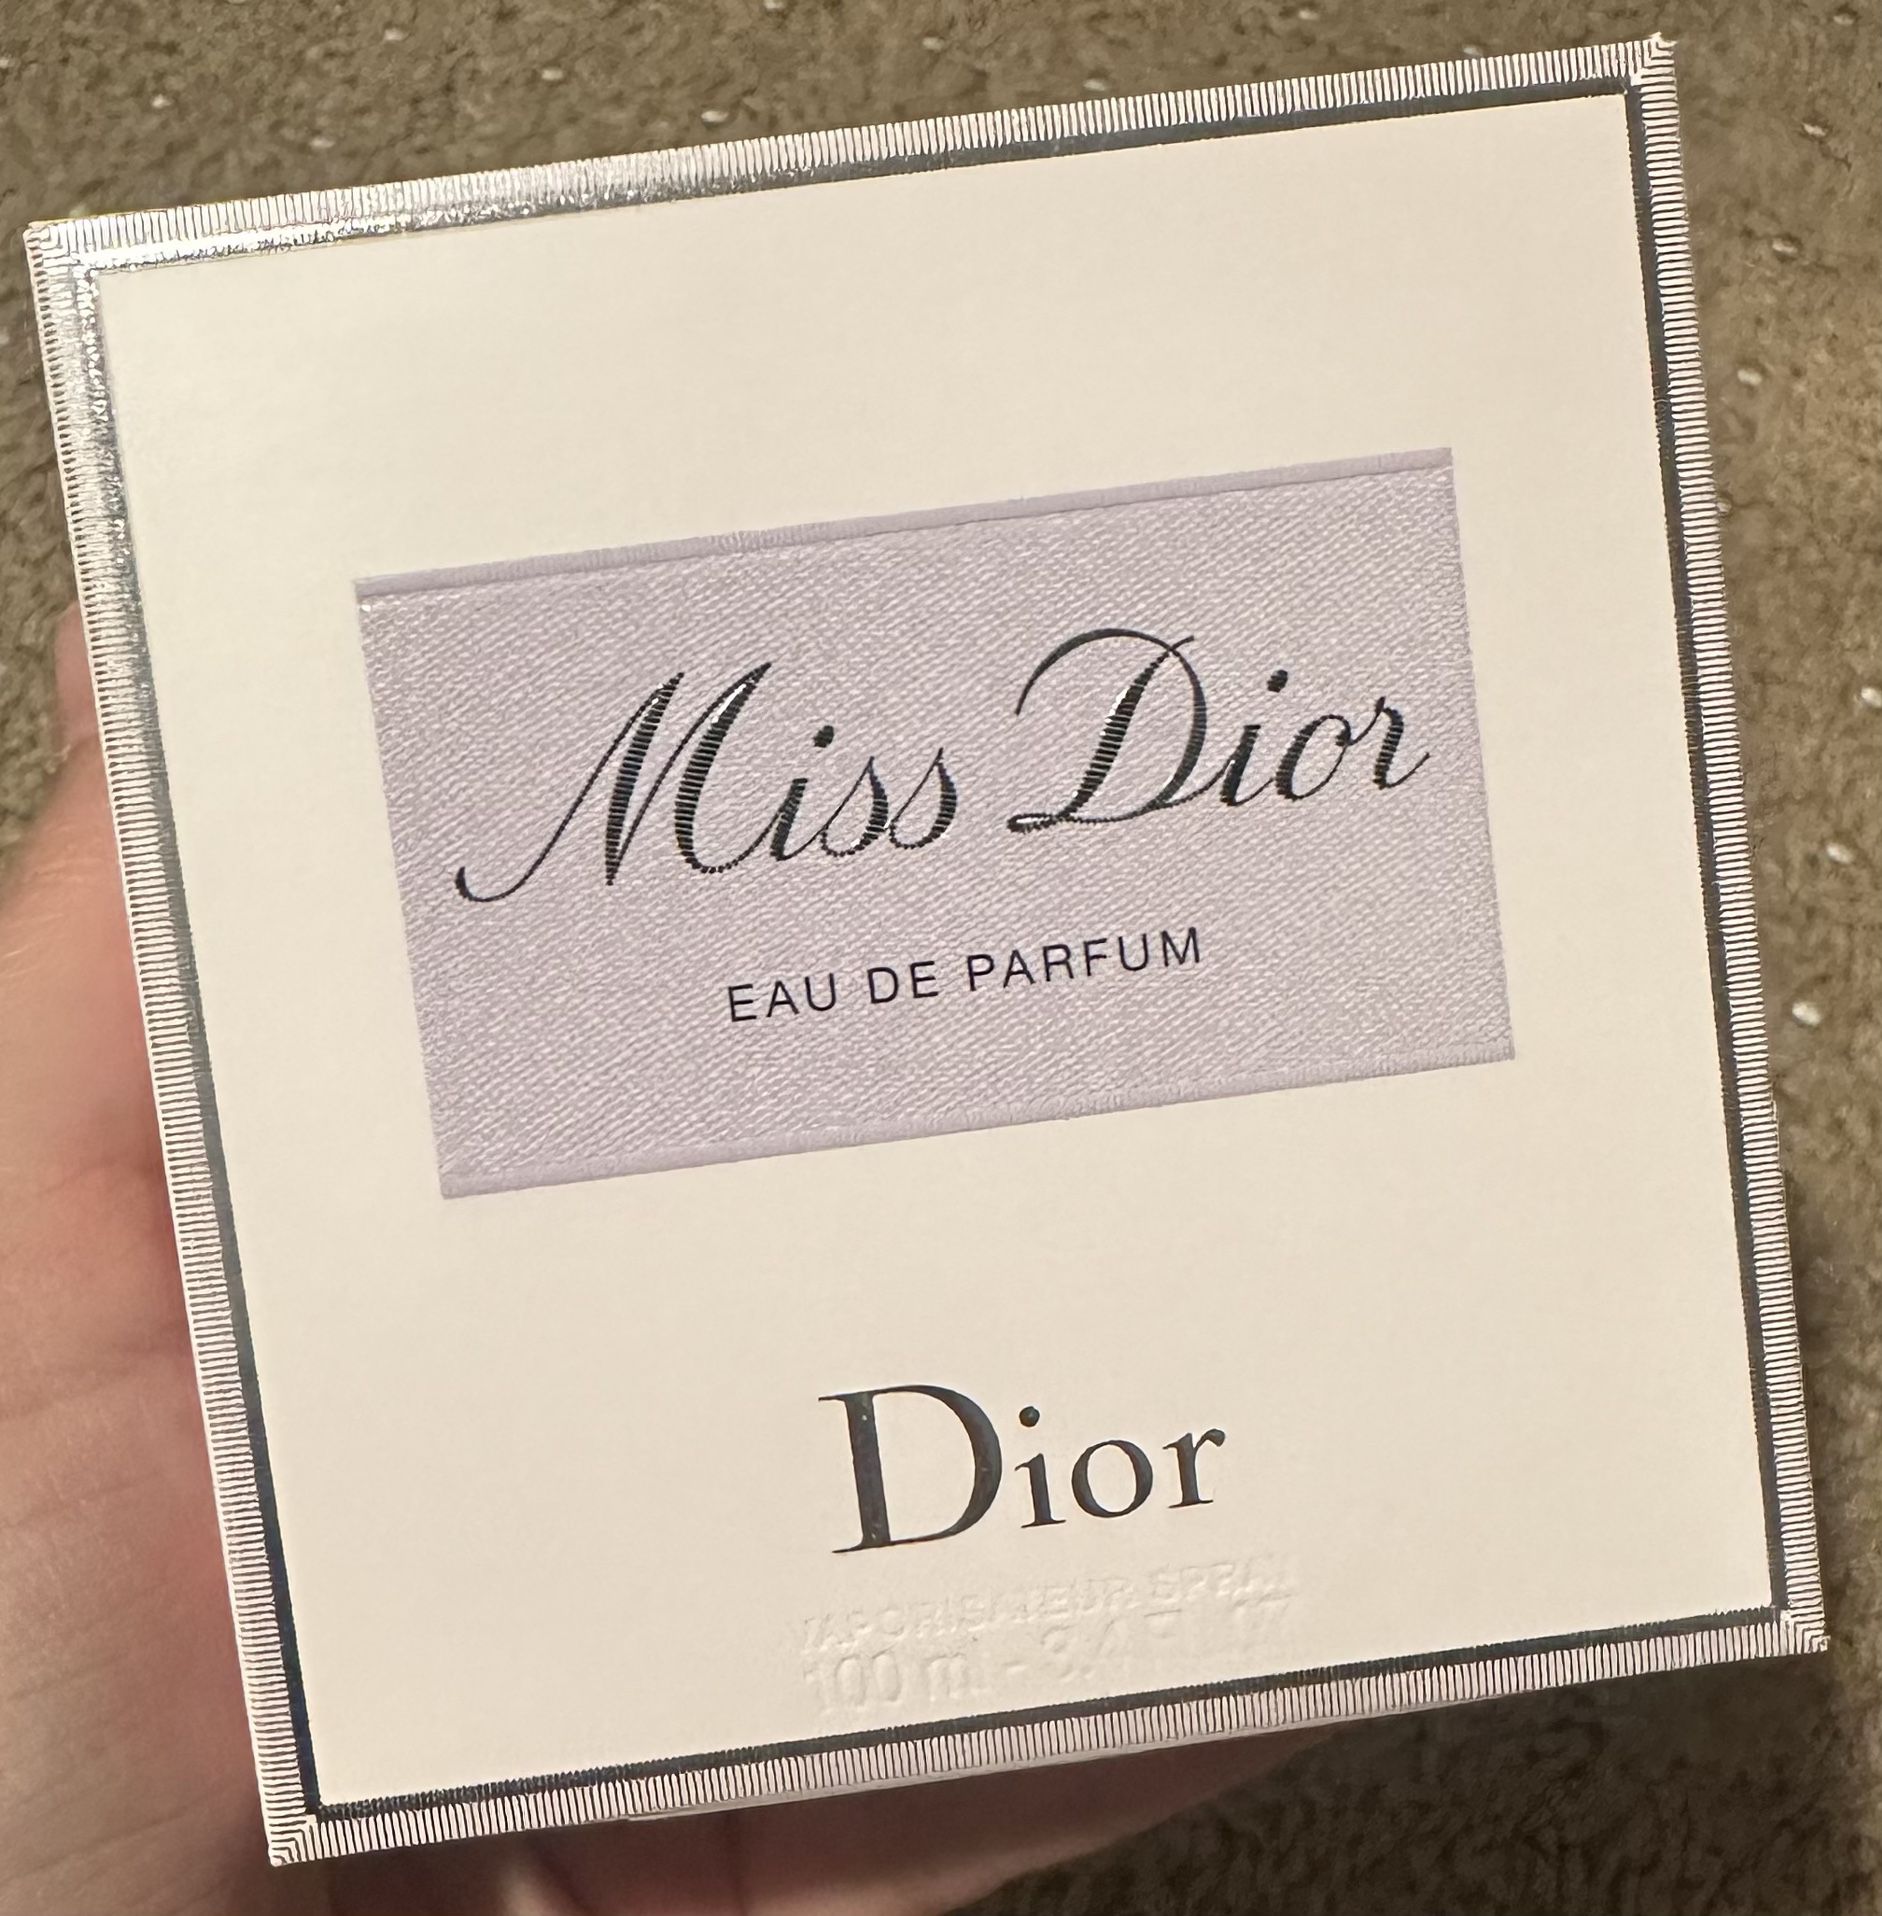 Dior “Miss Dior” Eau De Parfum 3.4oz